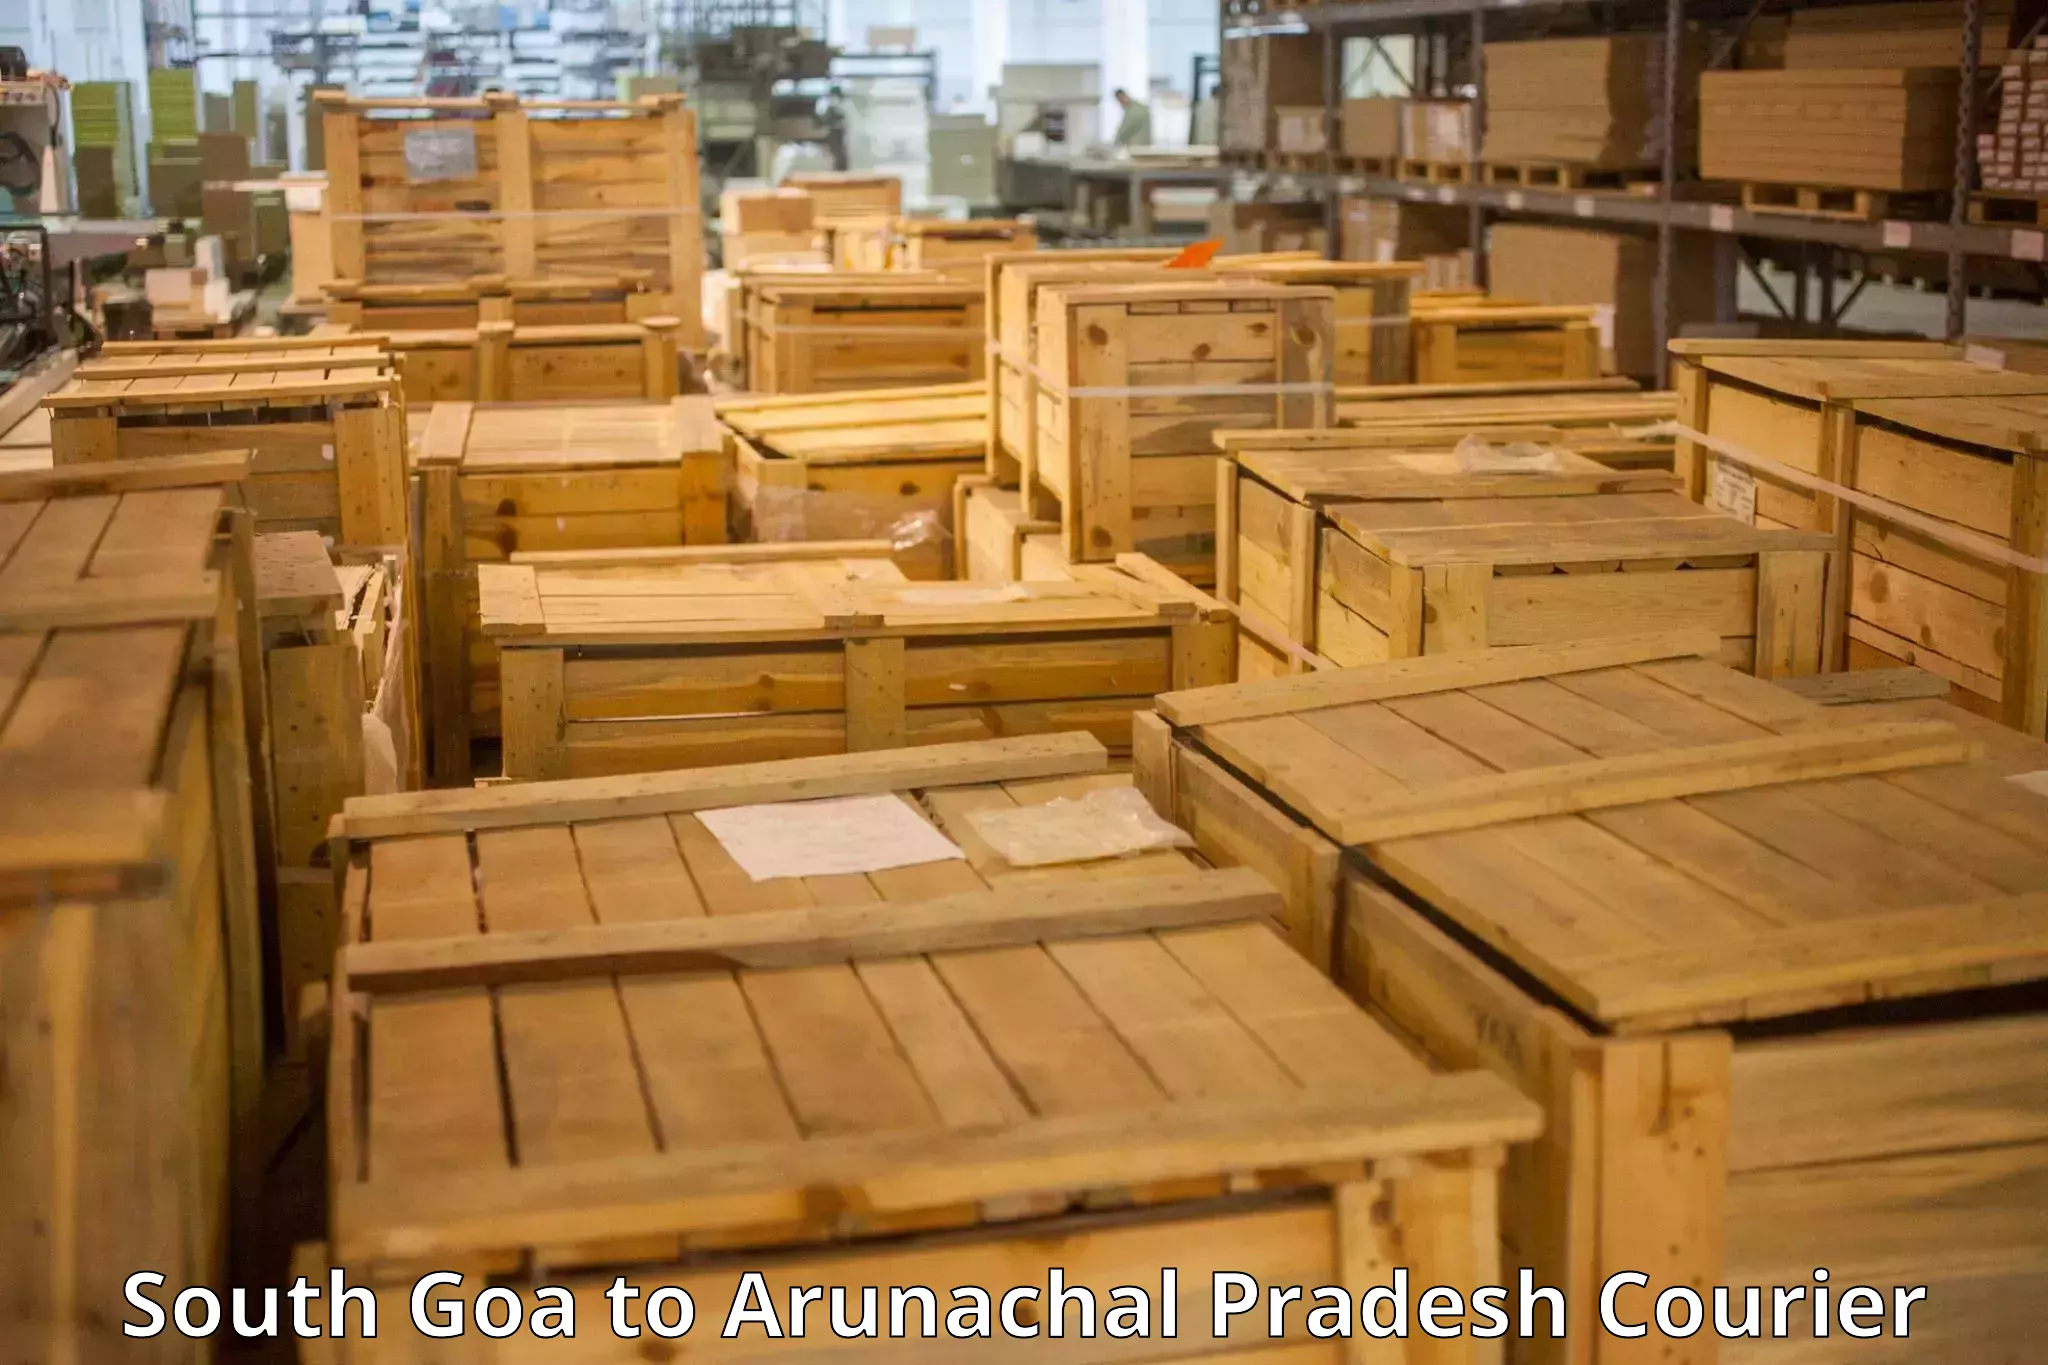 Same day luggage service South Goa to Arunachal Pradesh